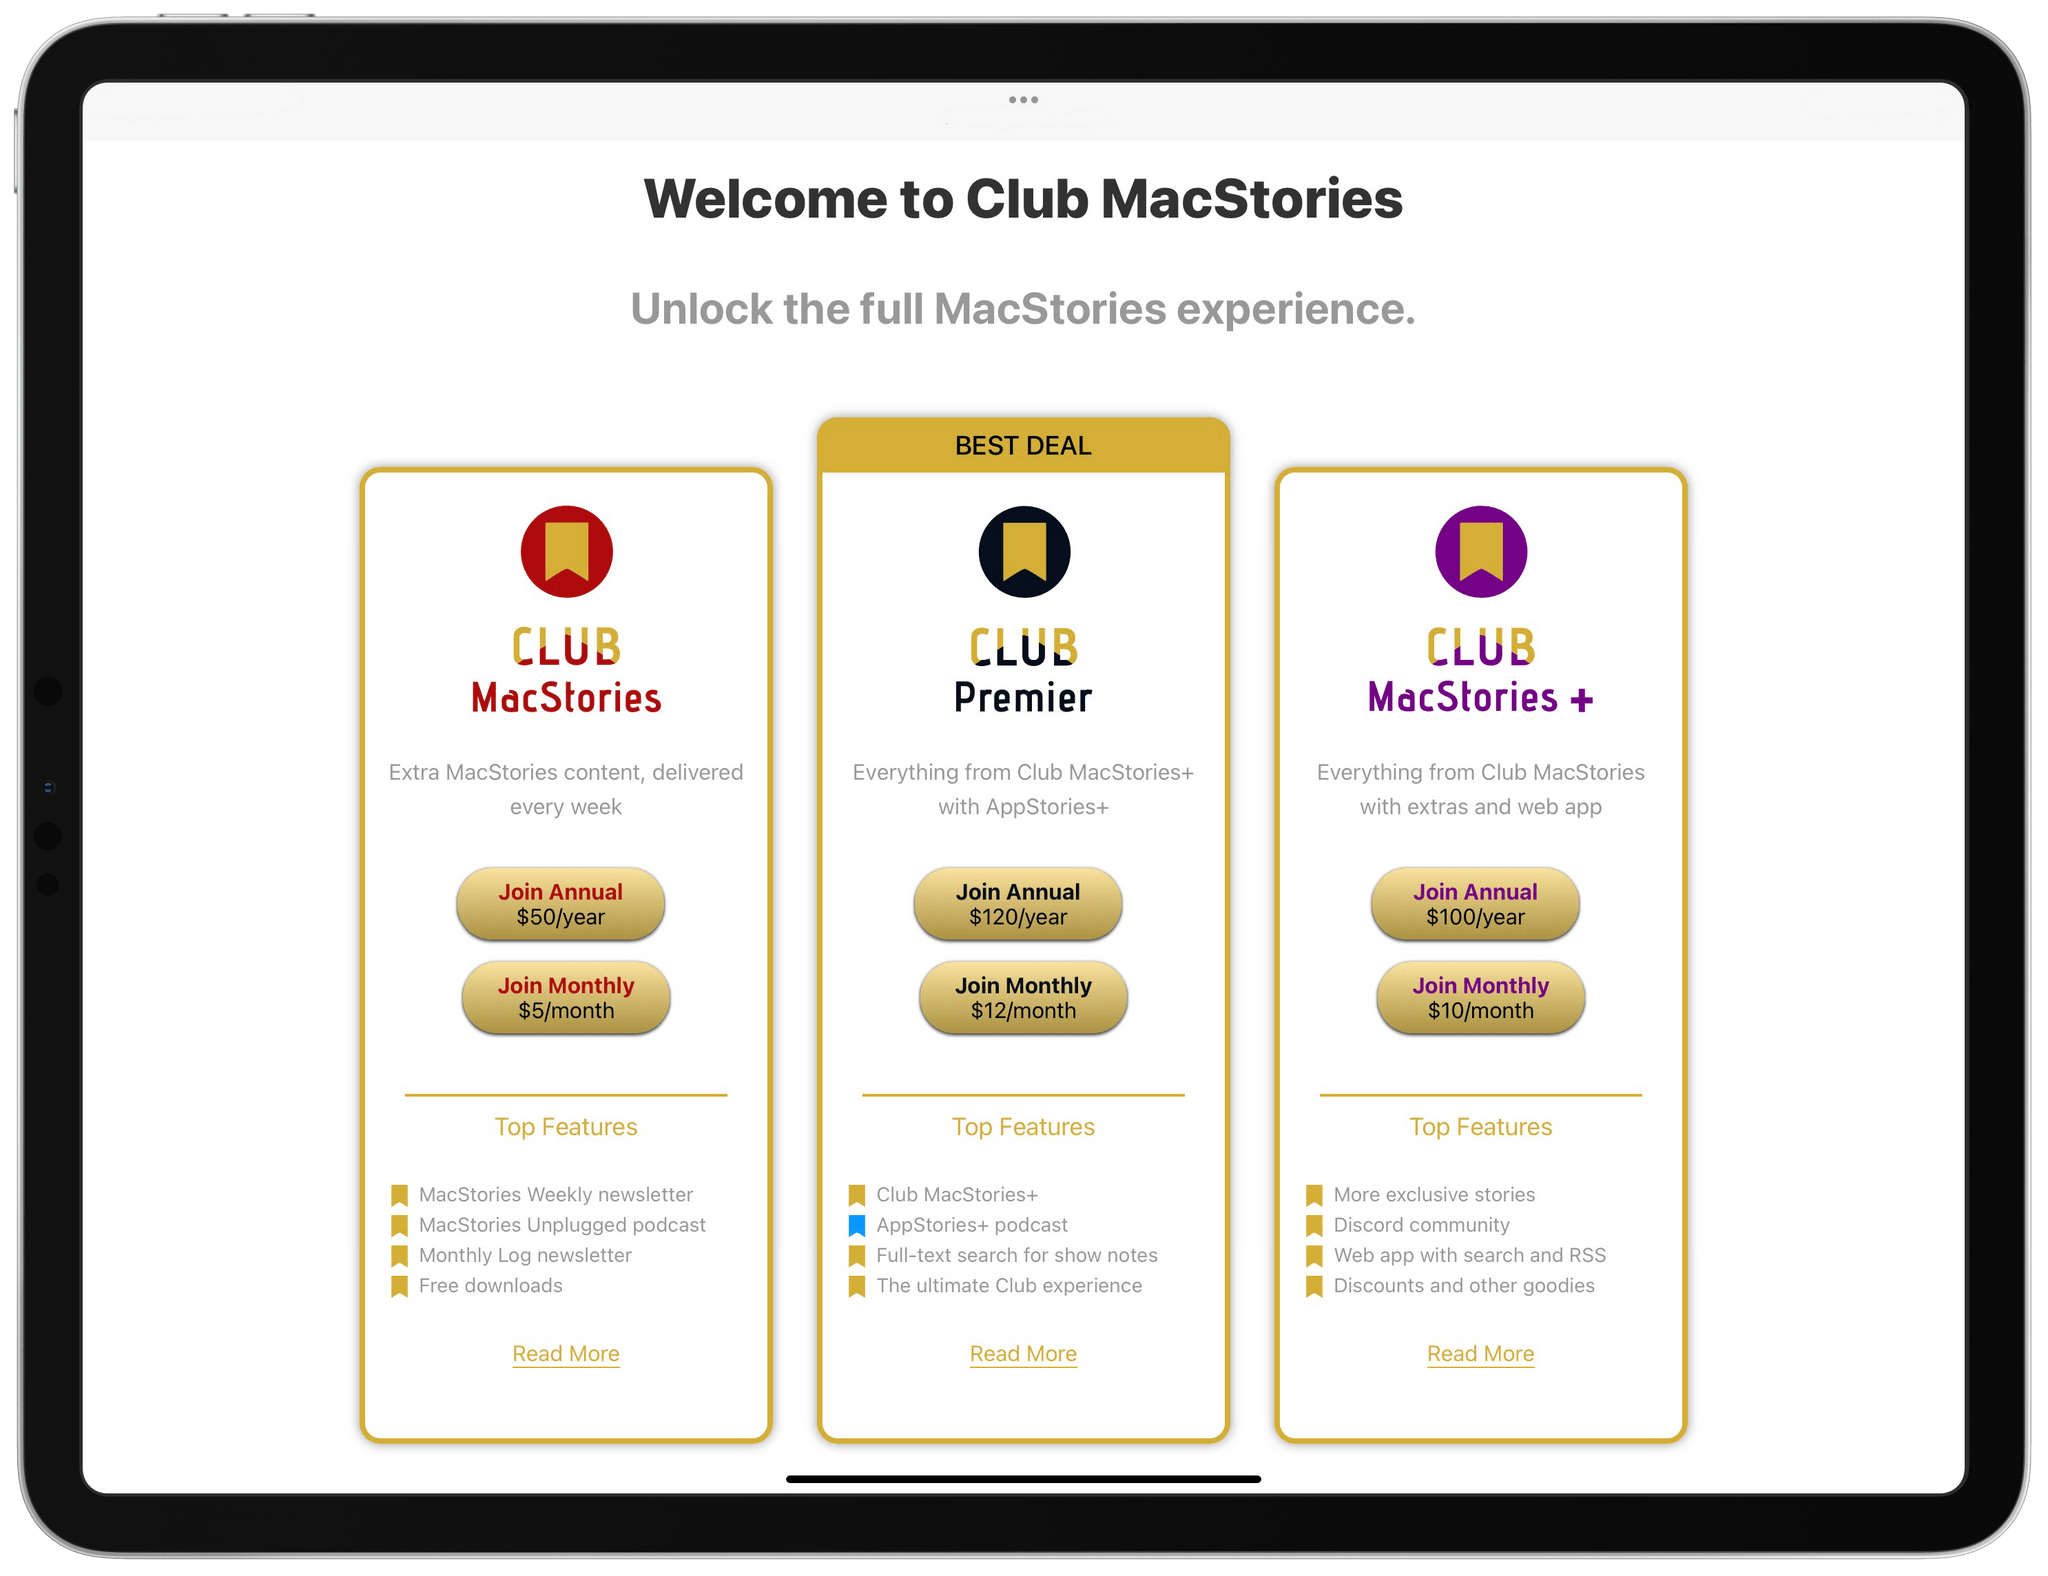 Visit our [Plans page](https://club.macstories.net/plans) for more details on each Club option.